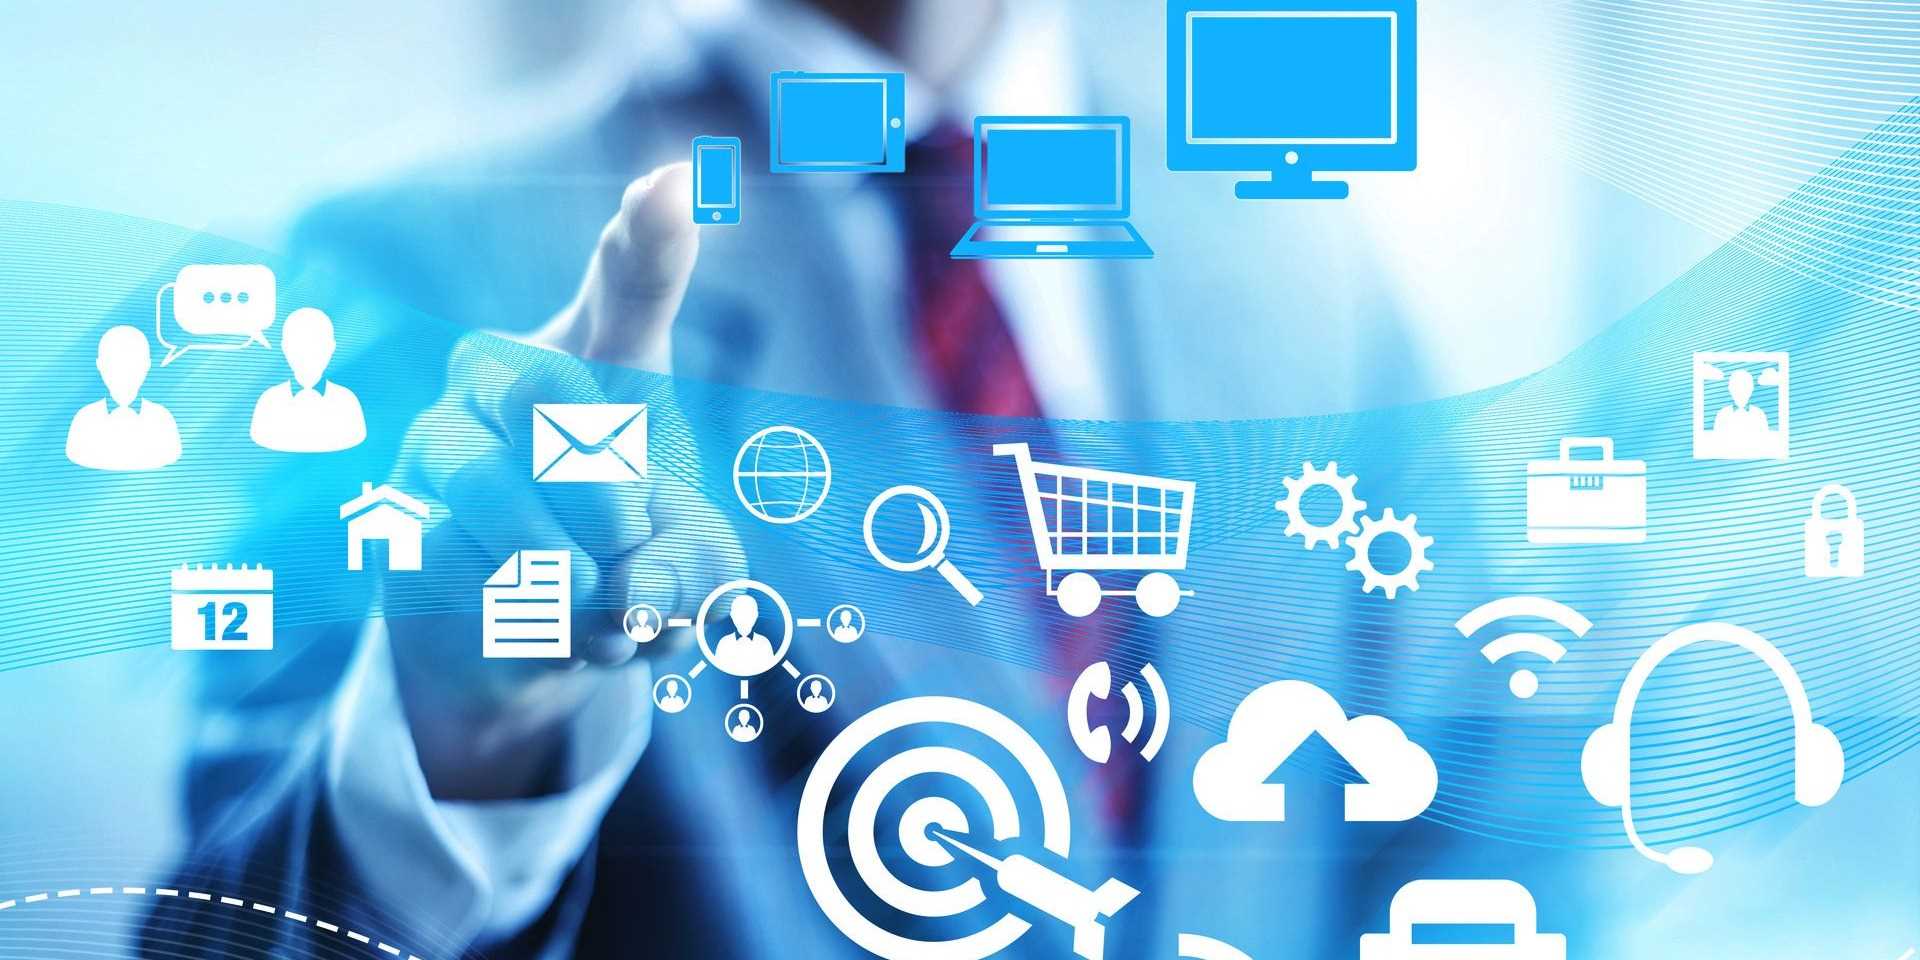 E Commerce Technology - E-Commerce Technology Market Is Booming Worldwide